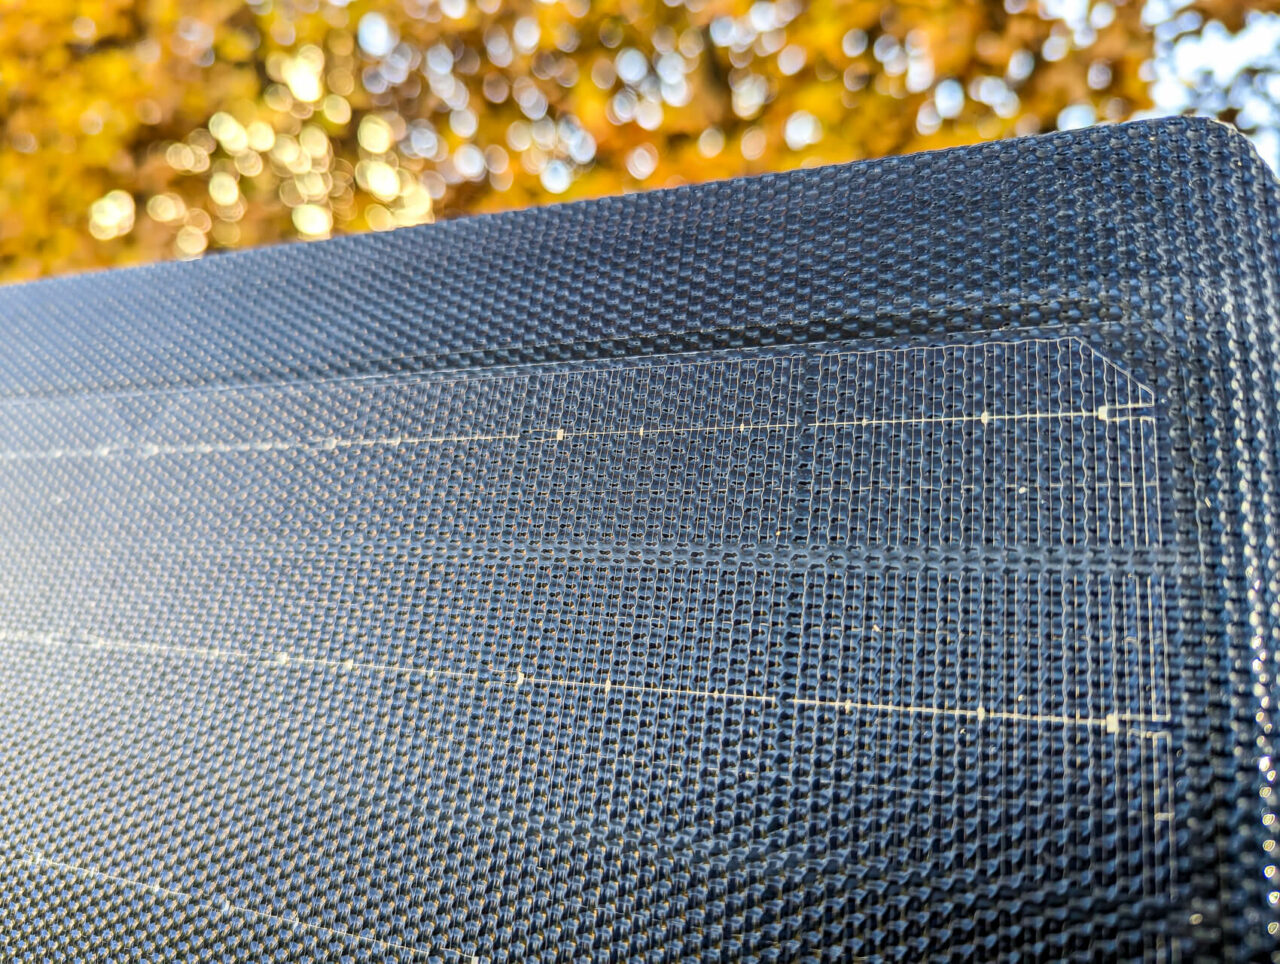 Zendure 200W Solar Panel - Solarzellen, Nahaufnahme, Beschichtung